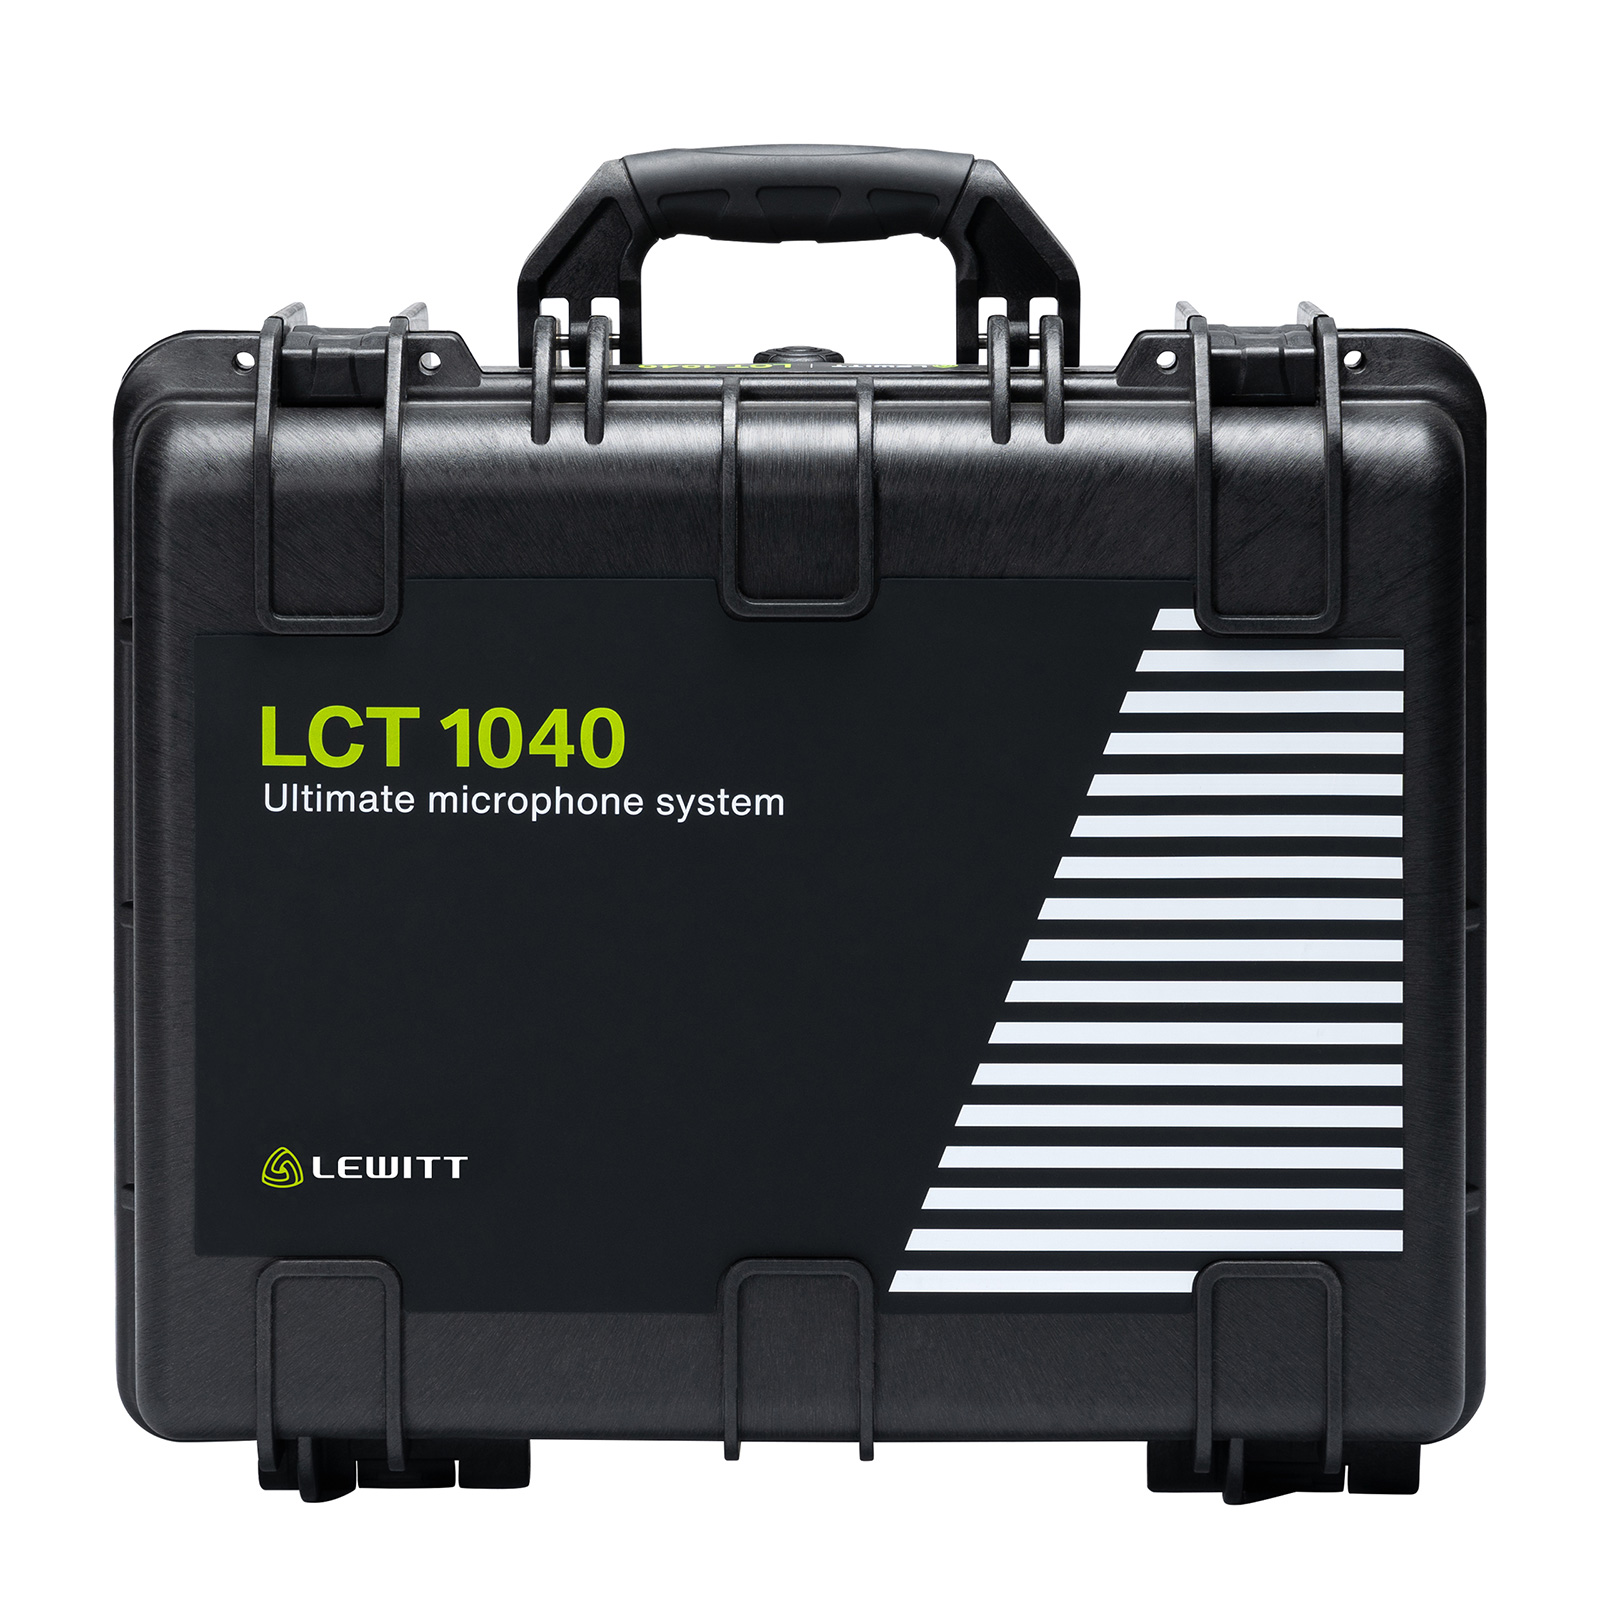 LCT 1040